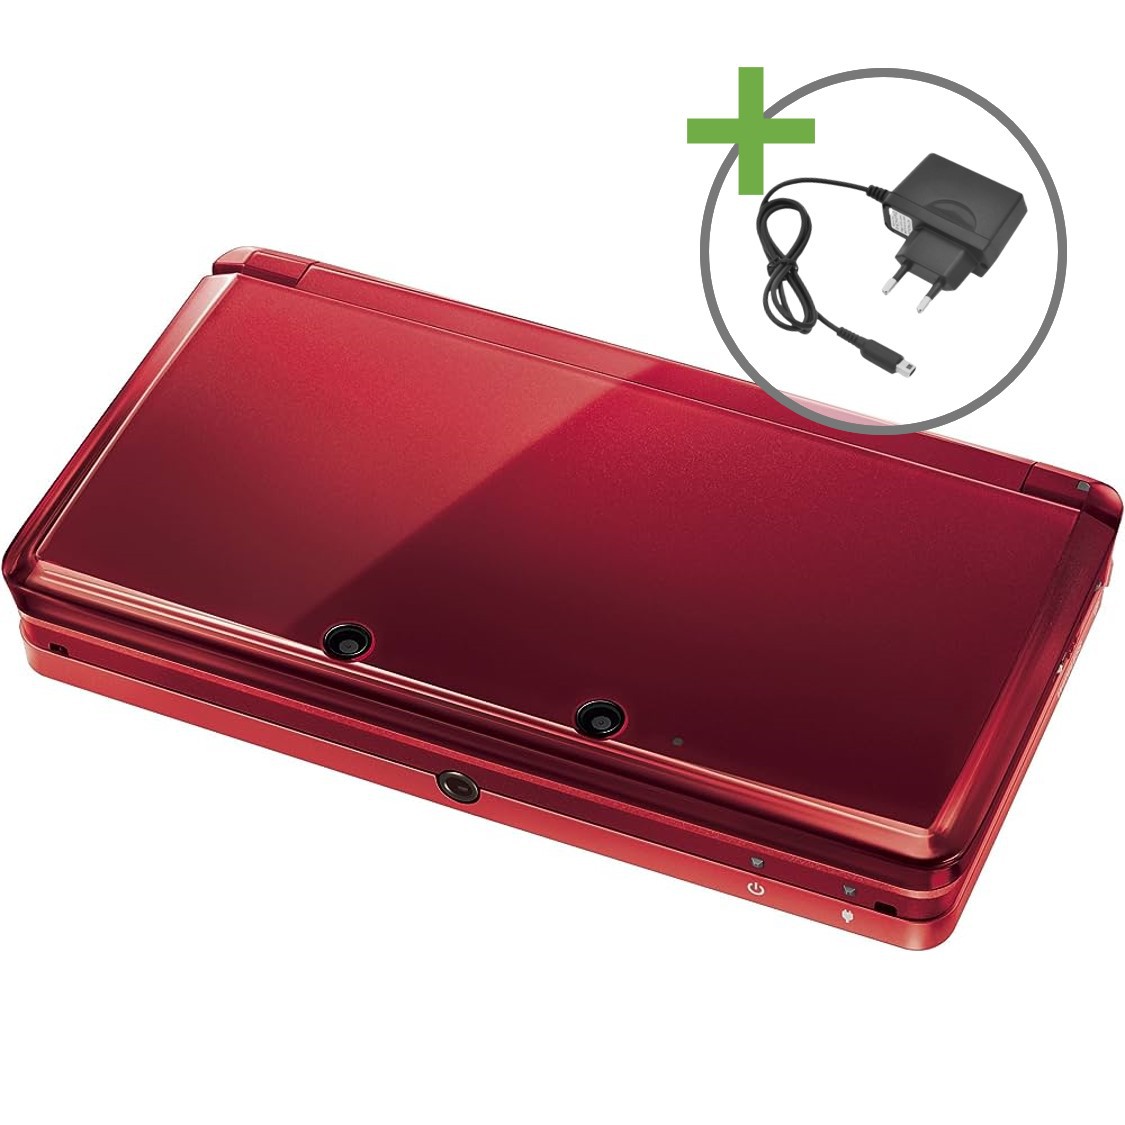 Nintendo 3DS - Metallic Red - Nintendo 3DS Hardware - 2